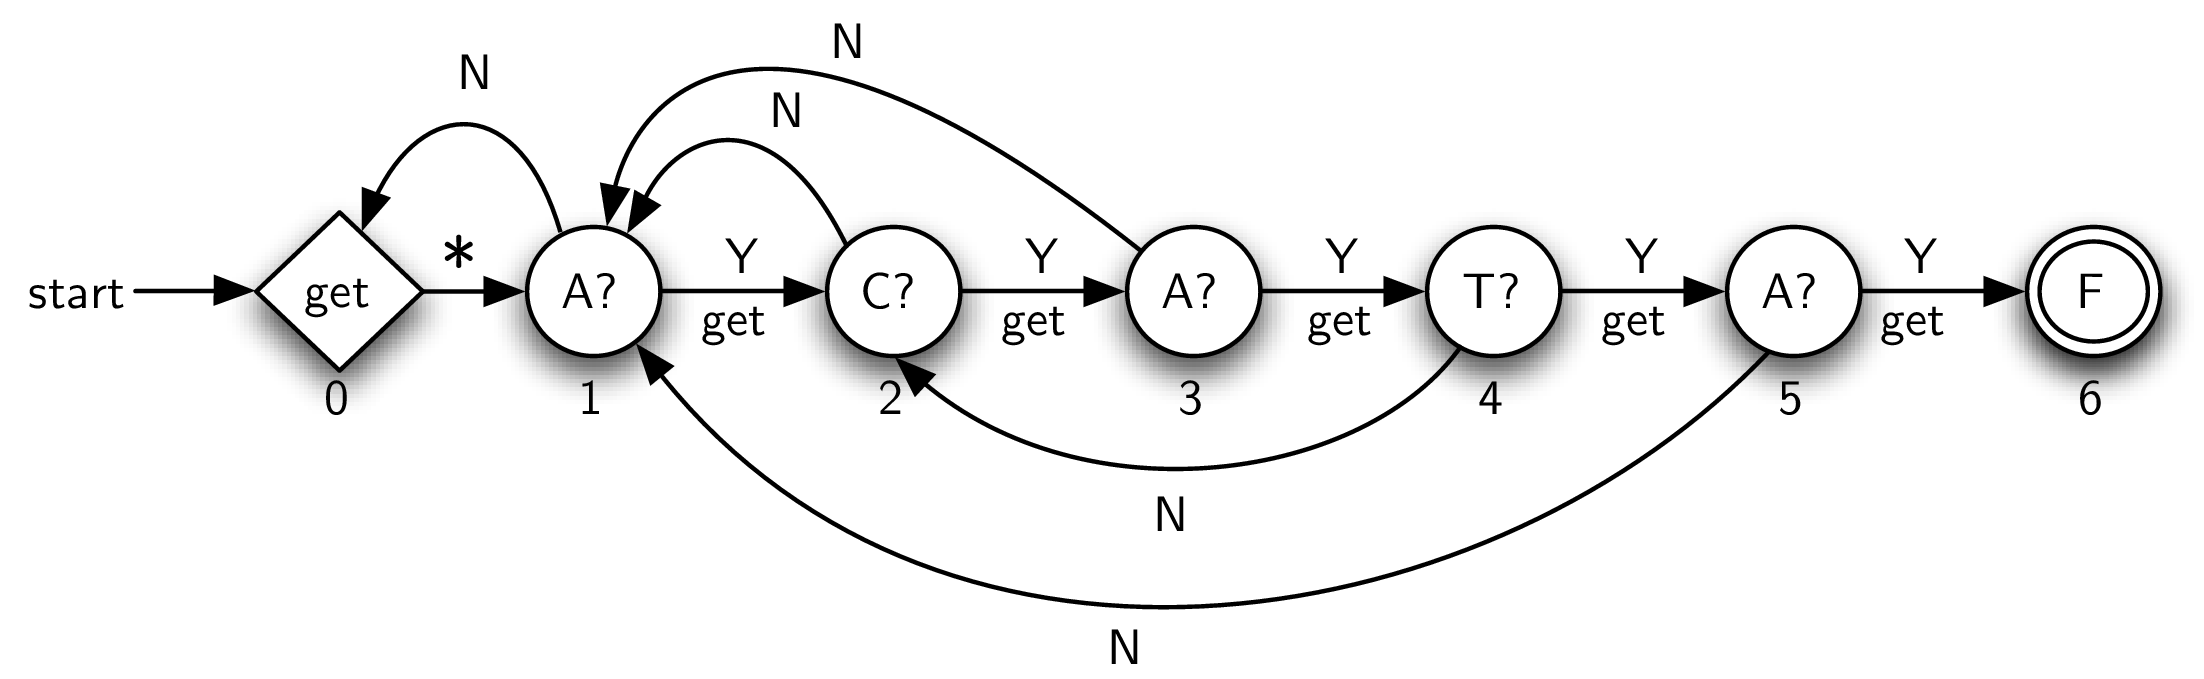 An Example KMP Graph